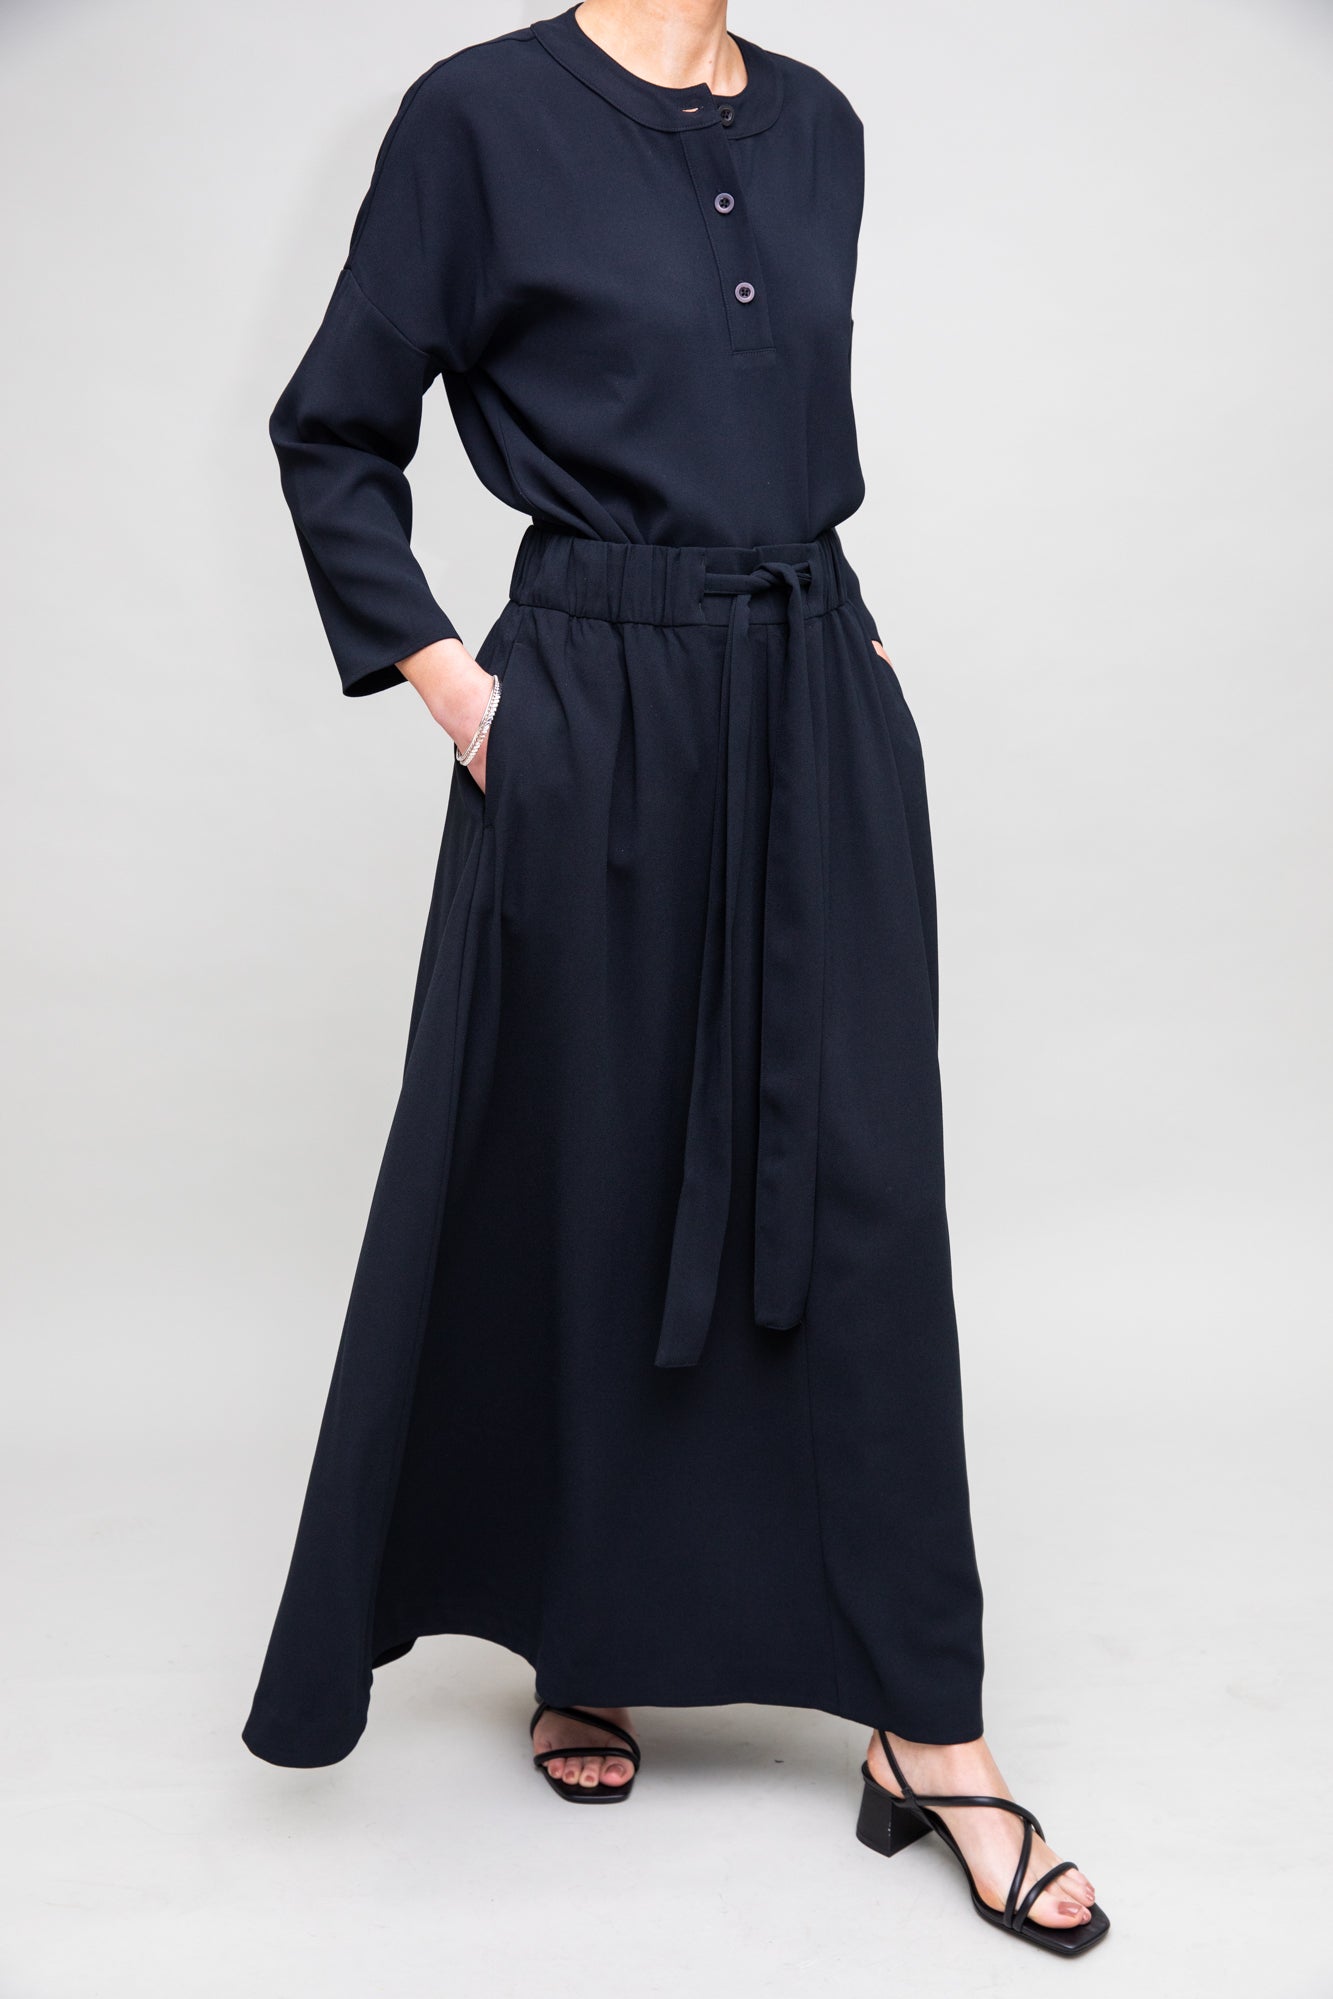 Black Leather Mini Skirt - Quilted Print - Esha - Preby London